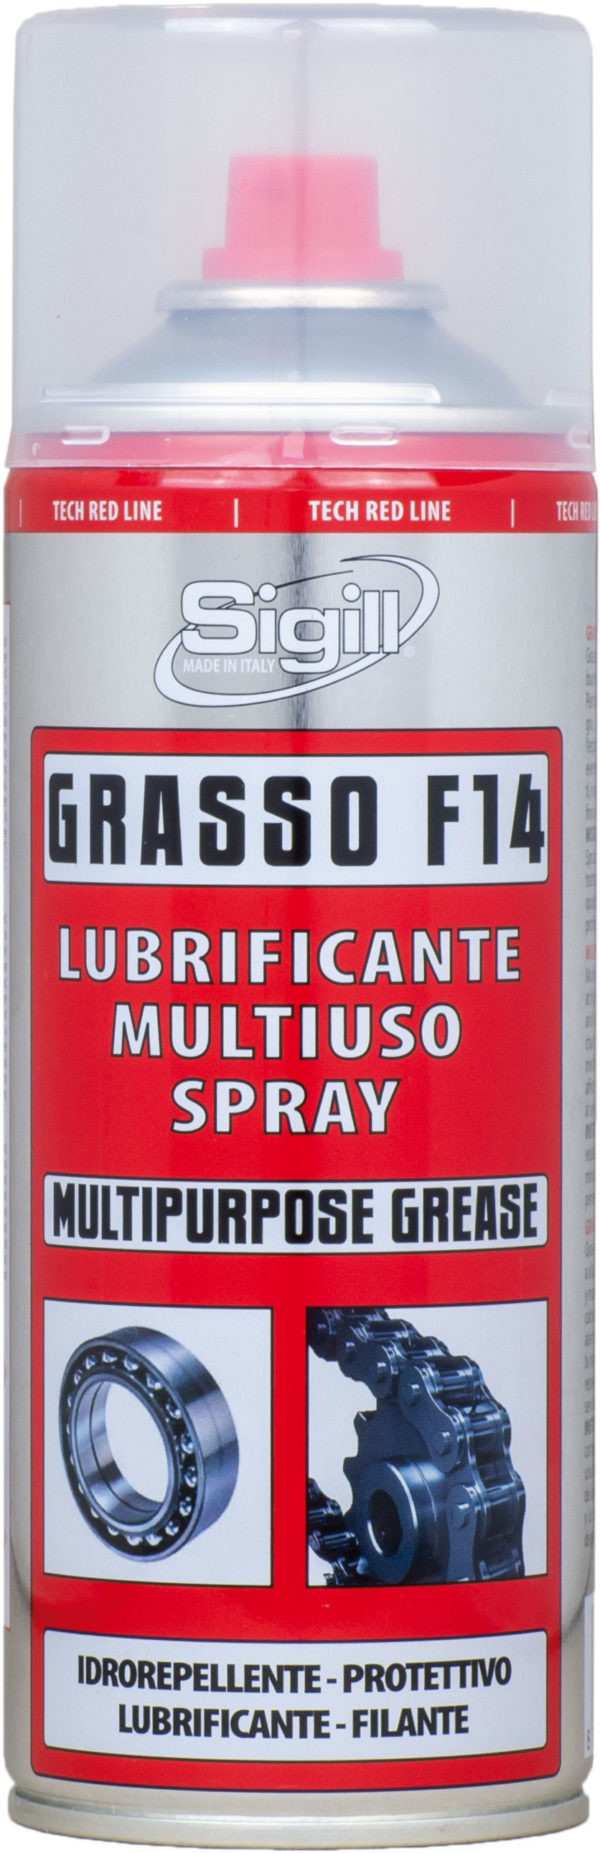 lubrificante spray